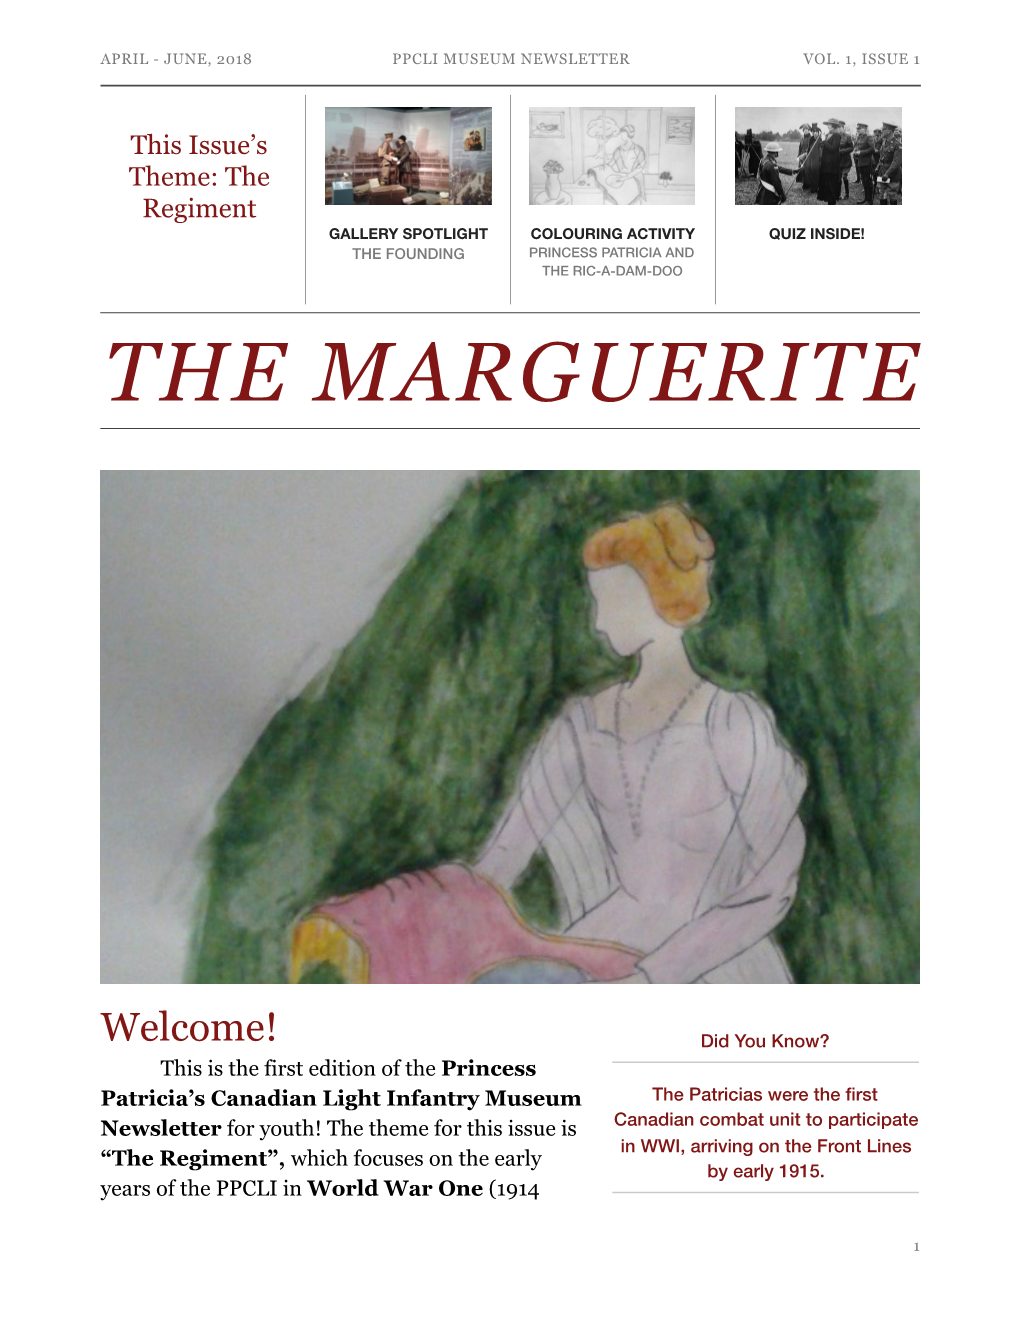 The Marguerite